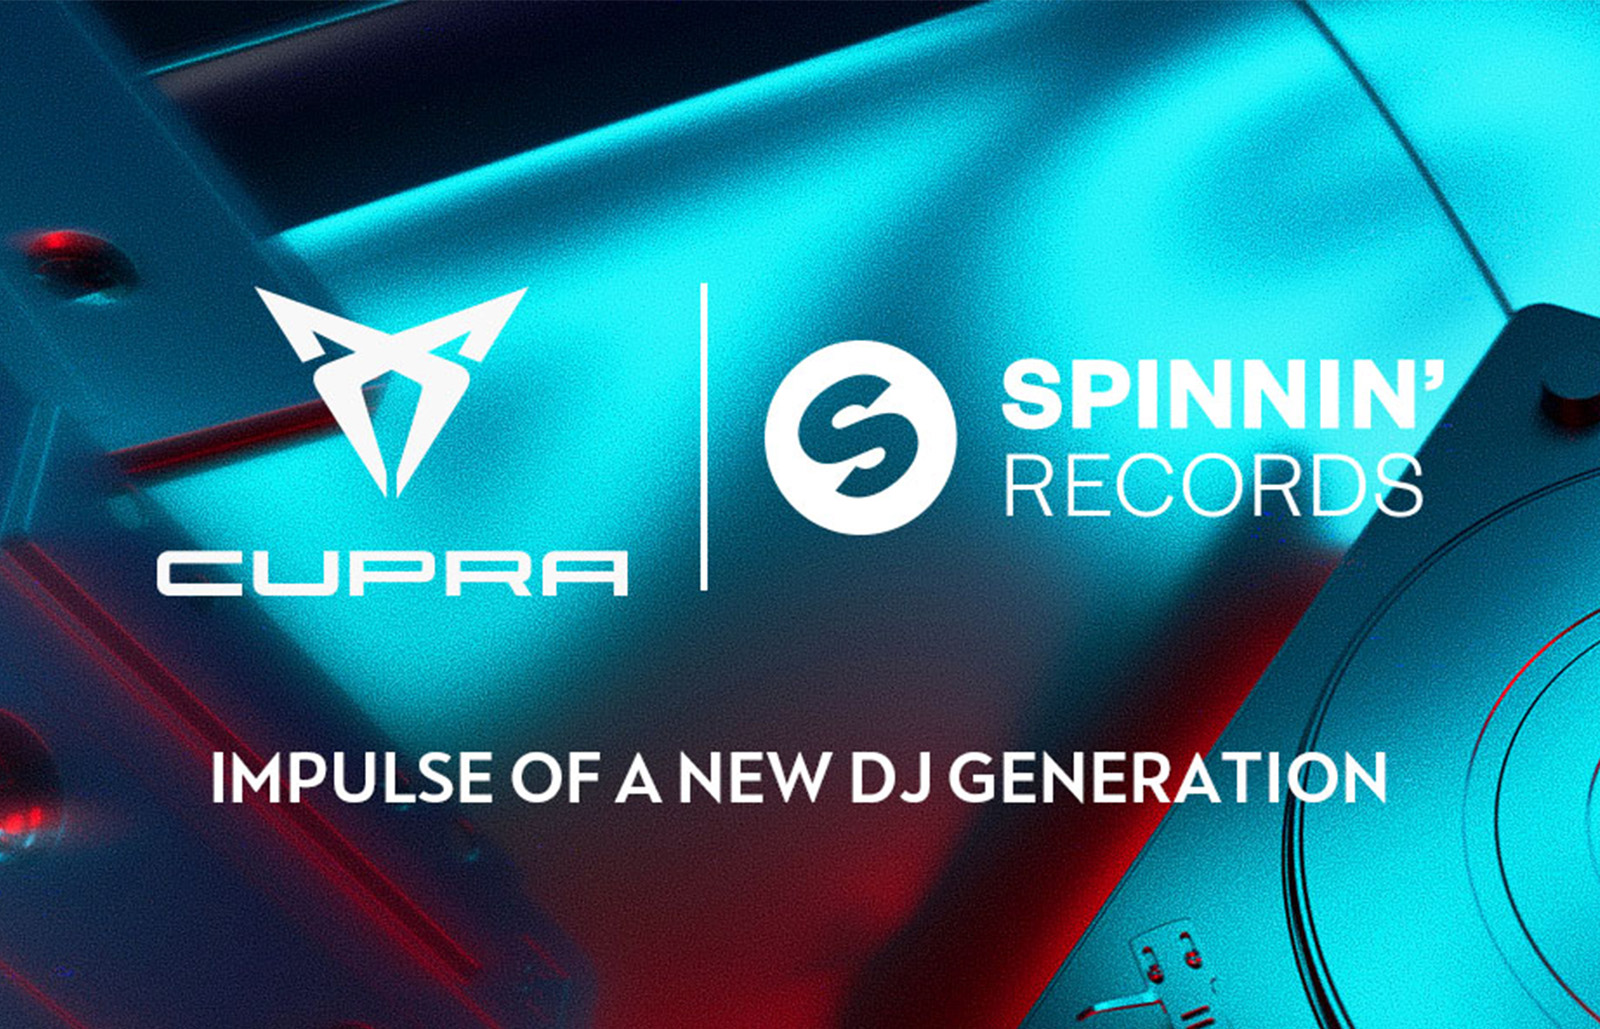 CUPRA x Spinnin records